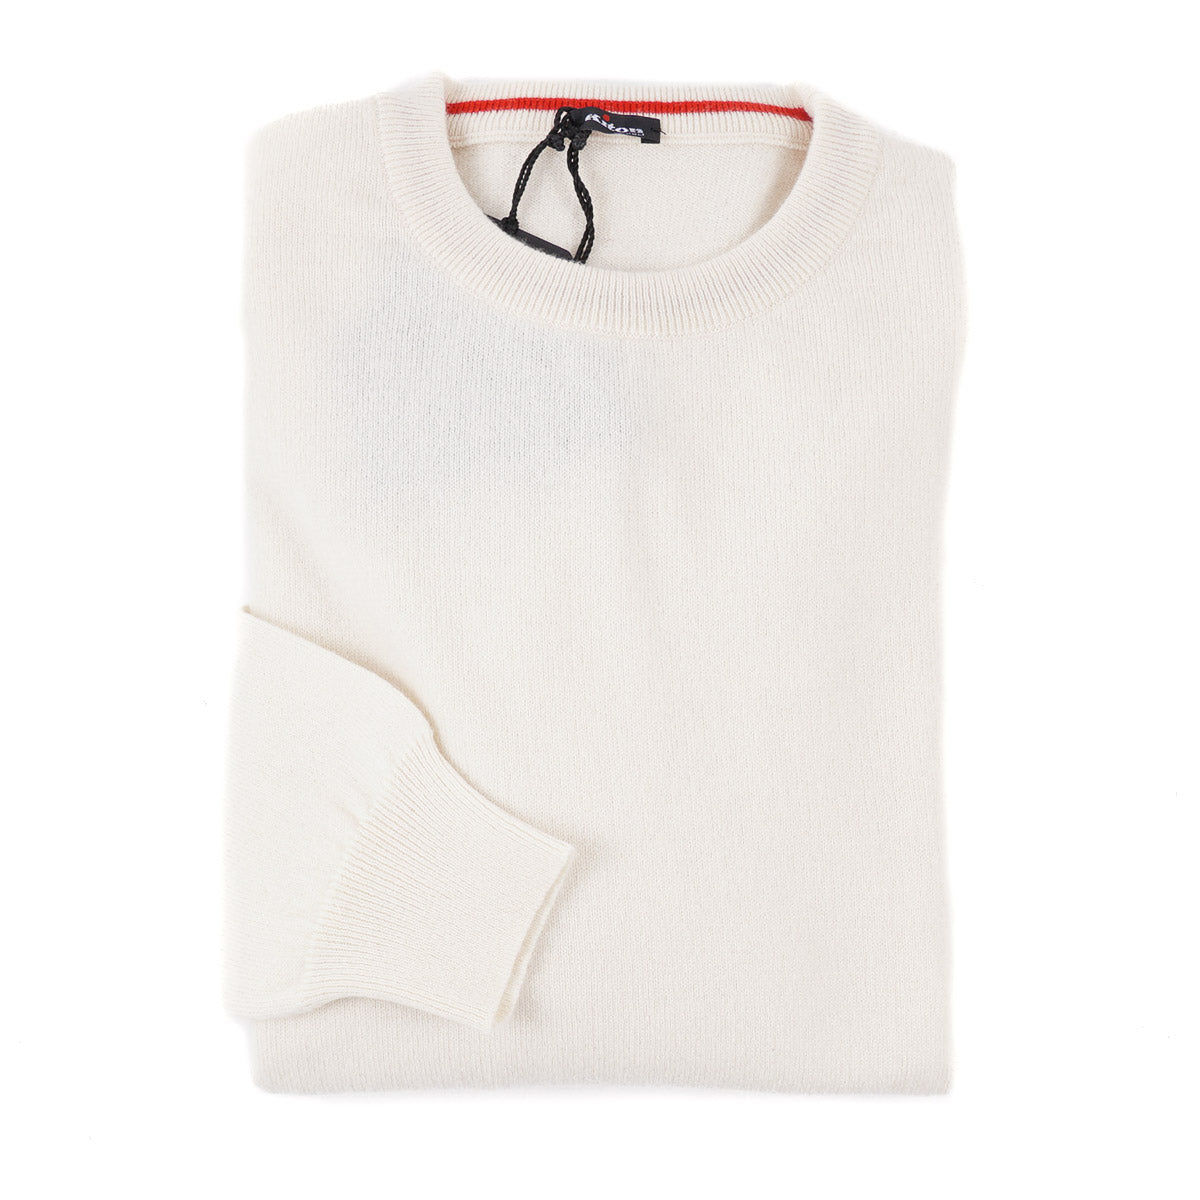 Kiton Soft 'Regal Cashmere' Sweater - Top Shelf Apparel